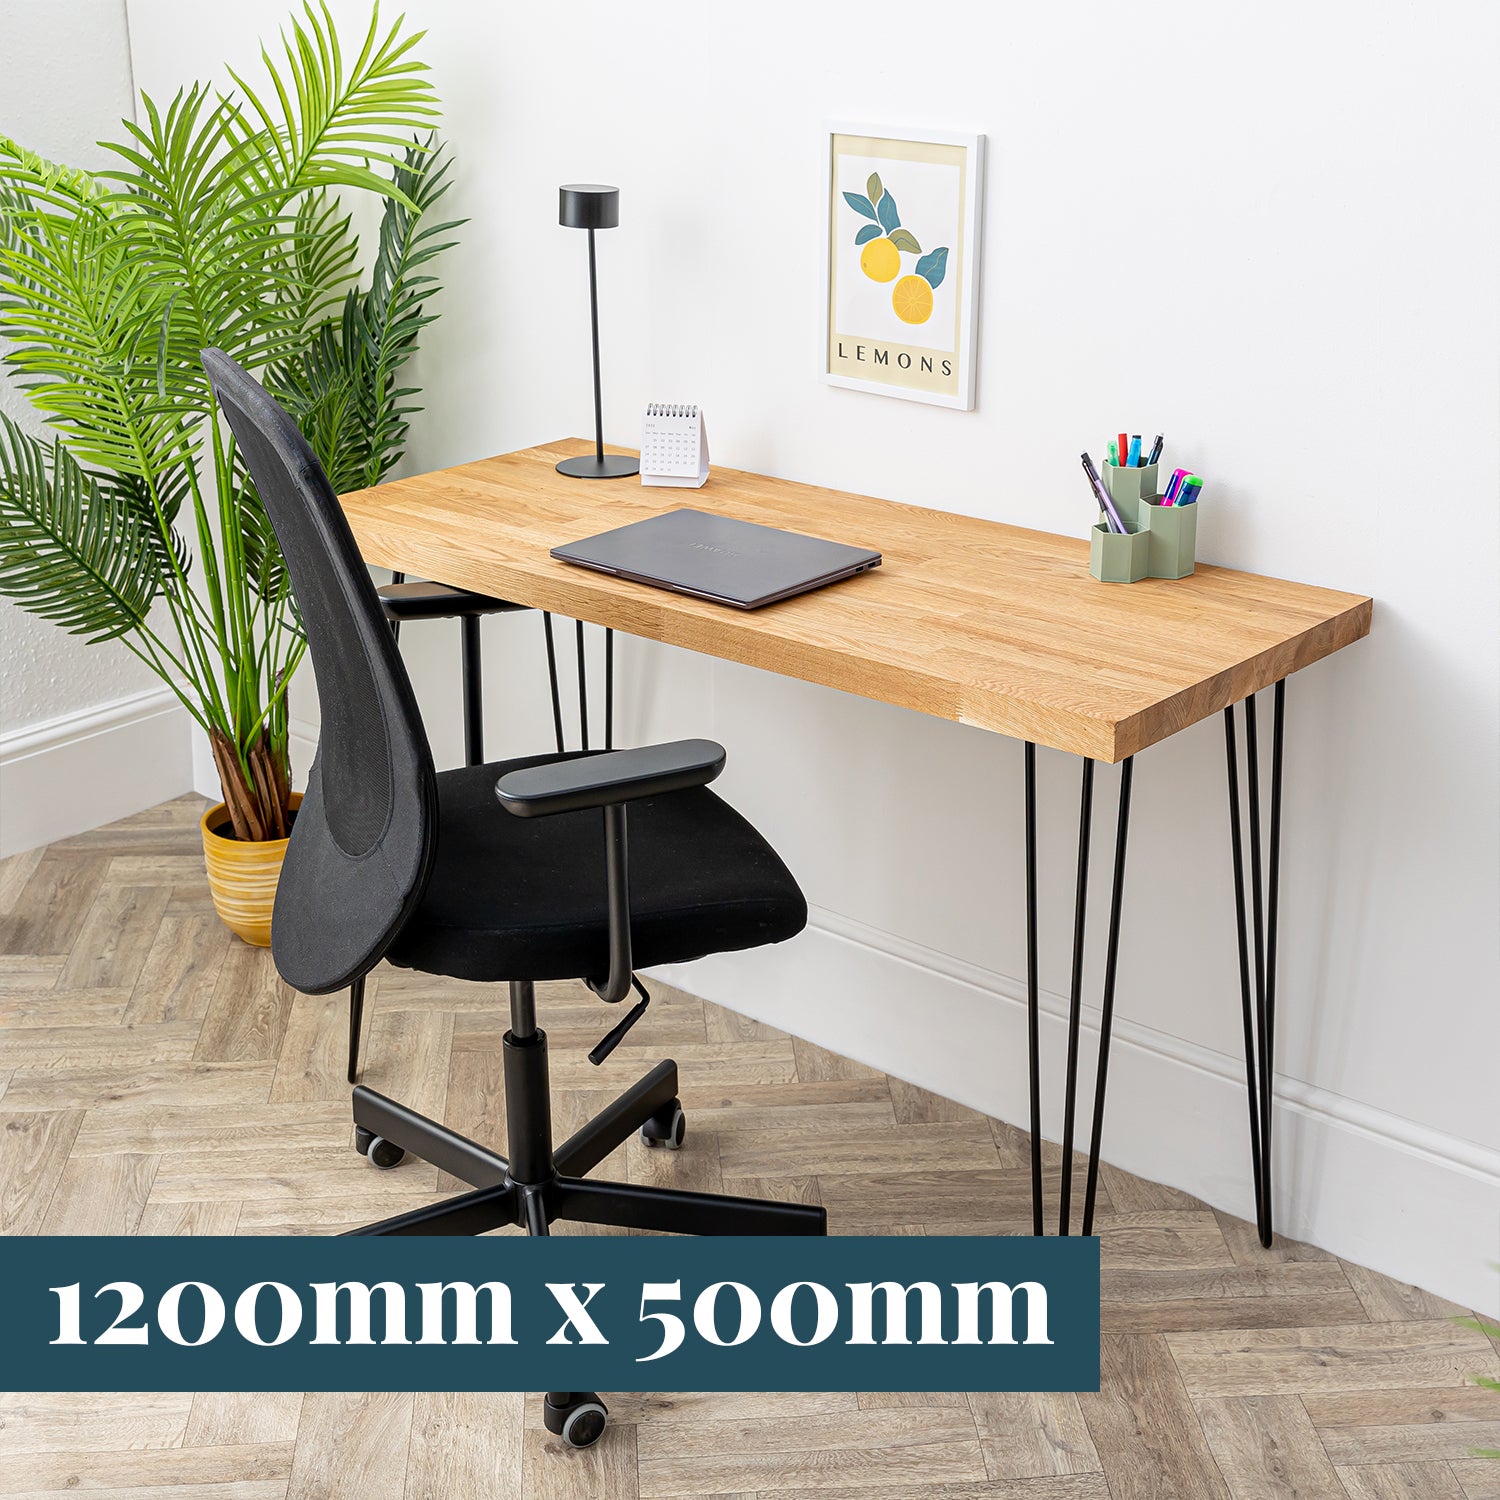 Oak Wooden Desk - 40mm thick desktop #length_1200mm depth_500mm